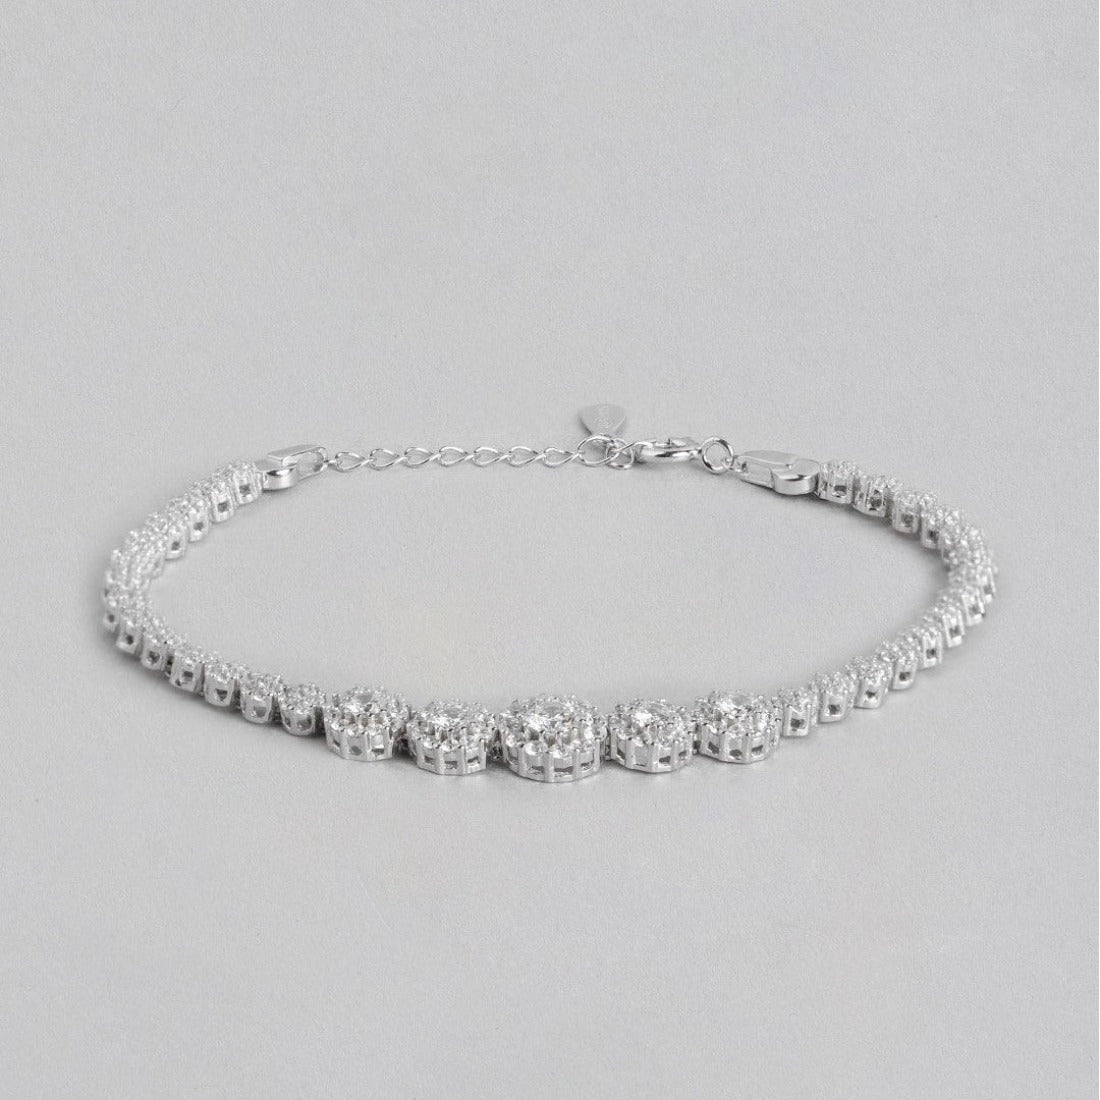 Sparkling Love 925 Silver Bracelet - Valentine Edition With Gift Box